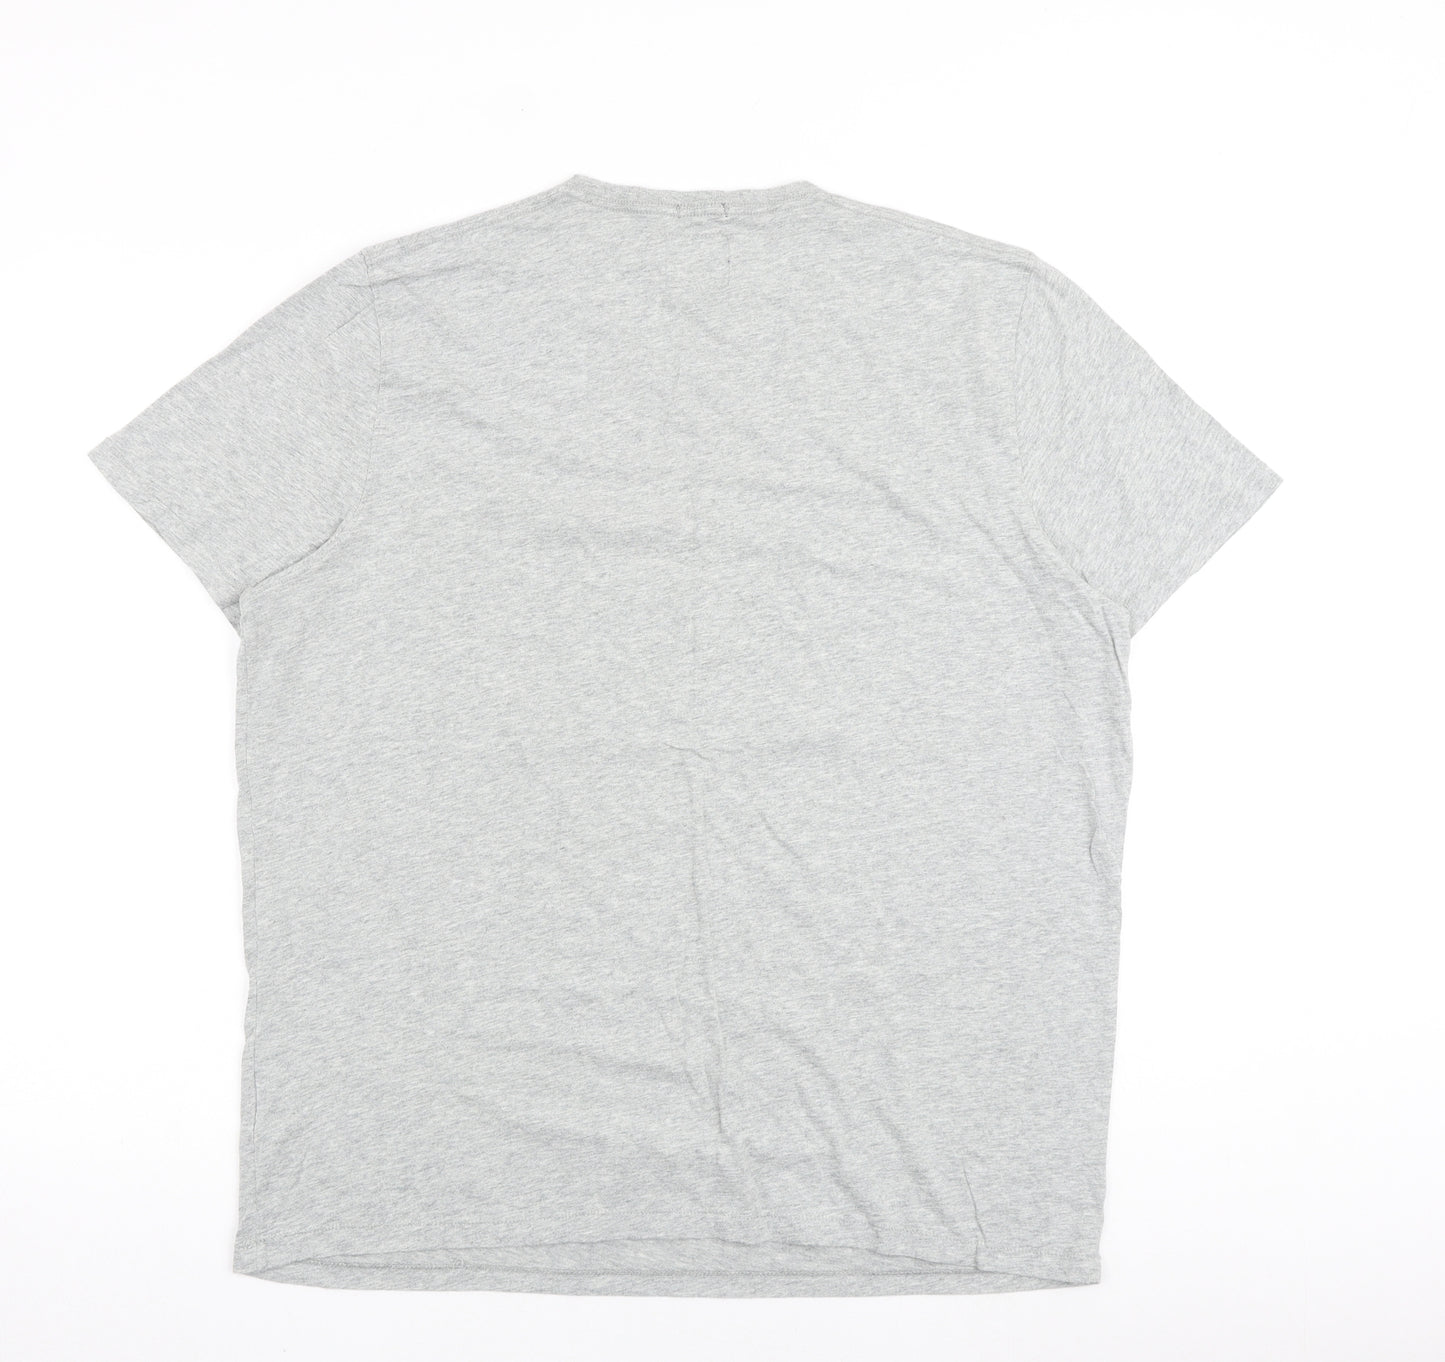 Abercrombie & Fitch Mens Grey Cotton T-Shirt Size 2XL V-Neck